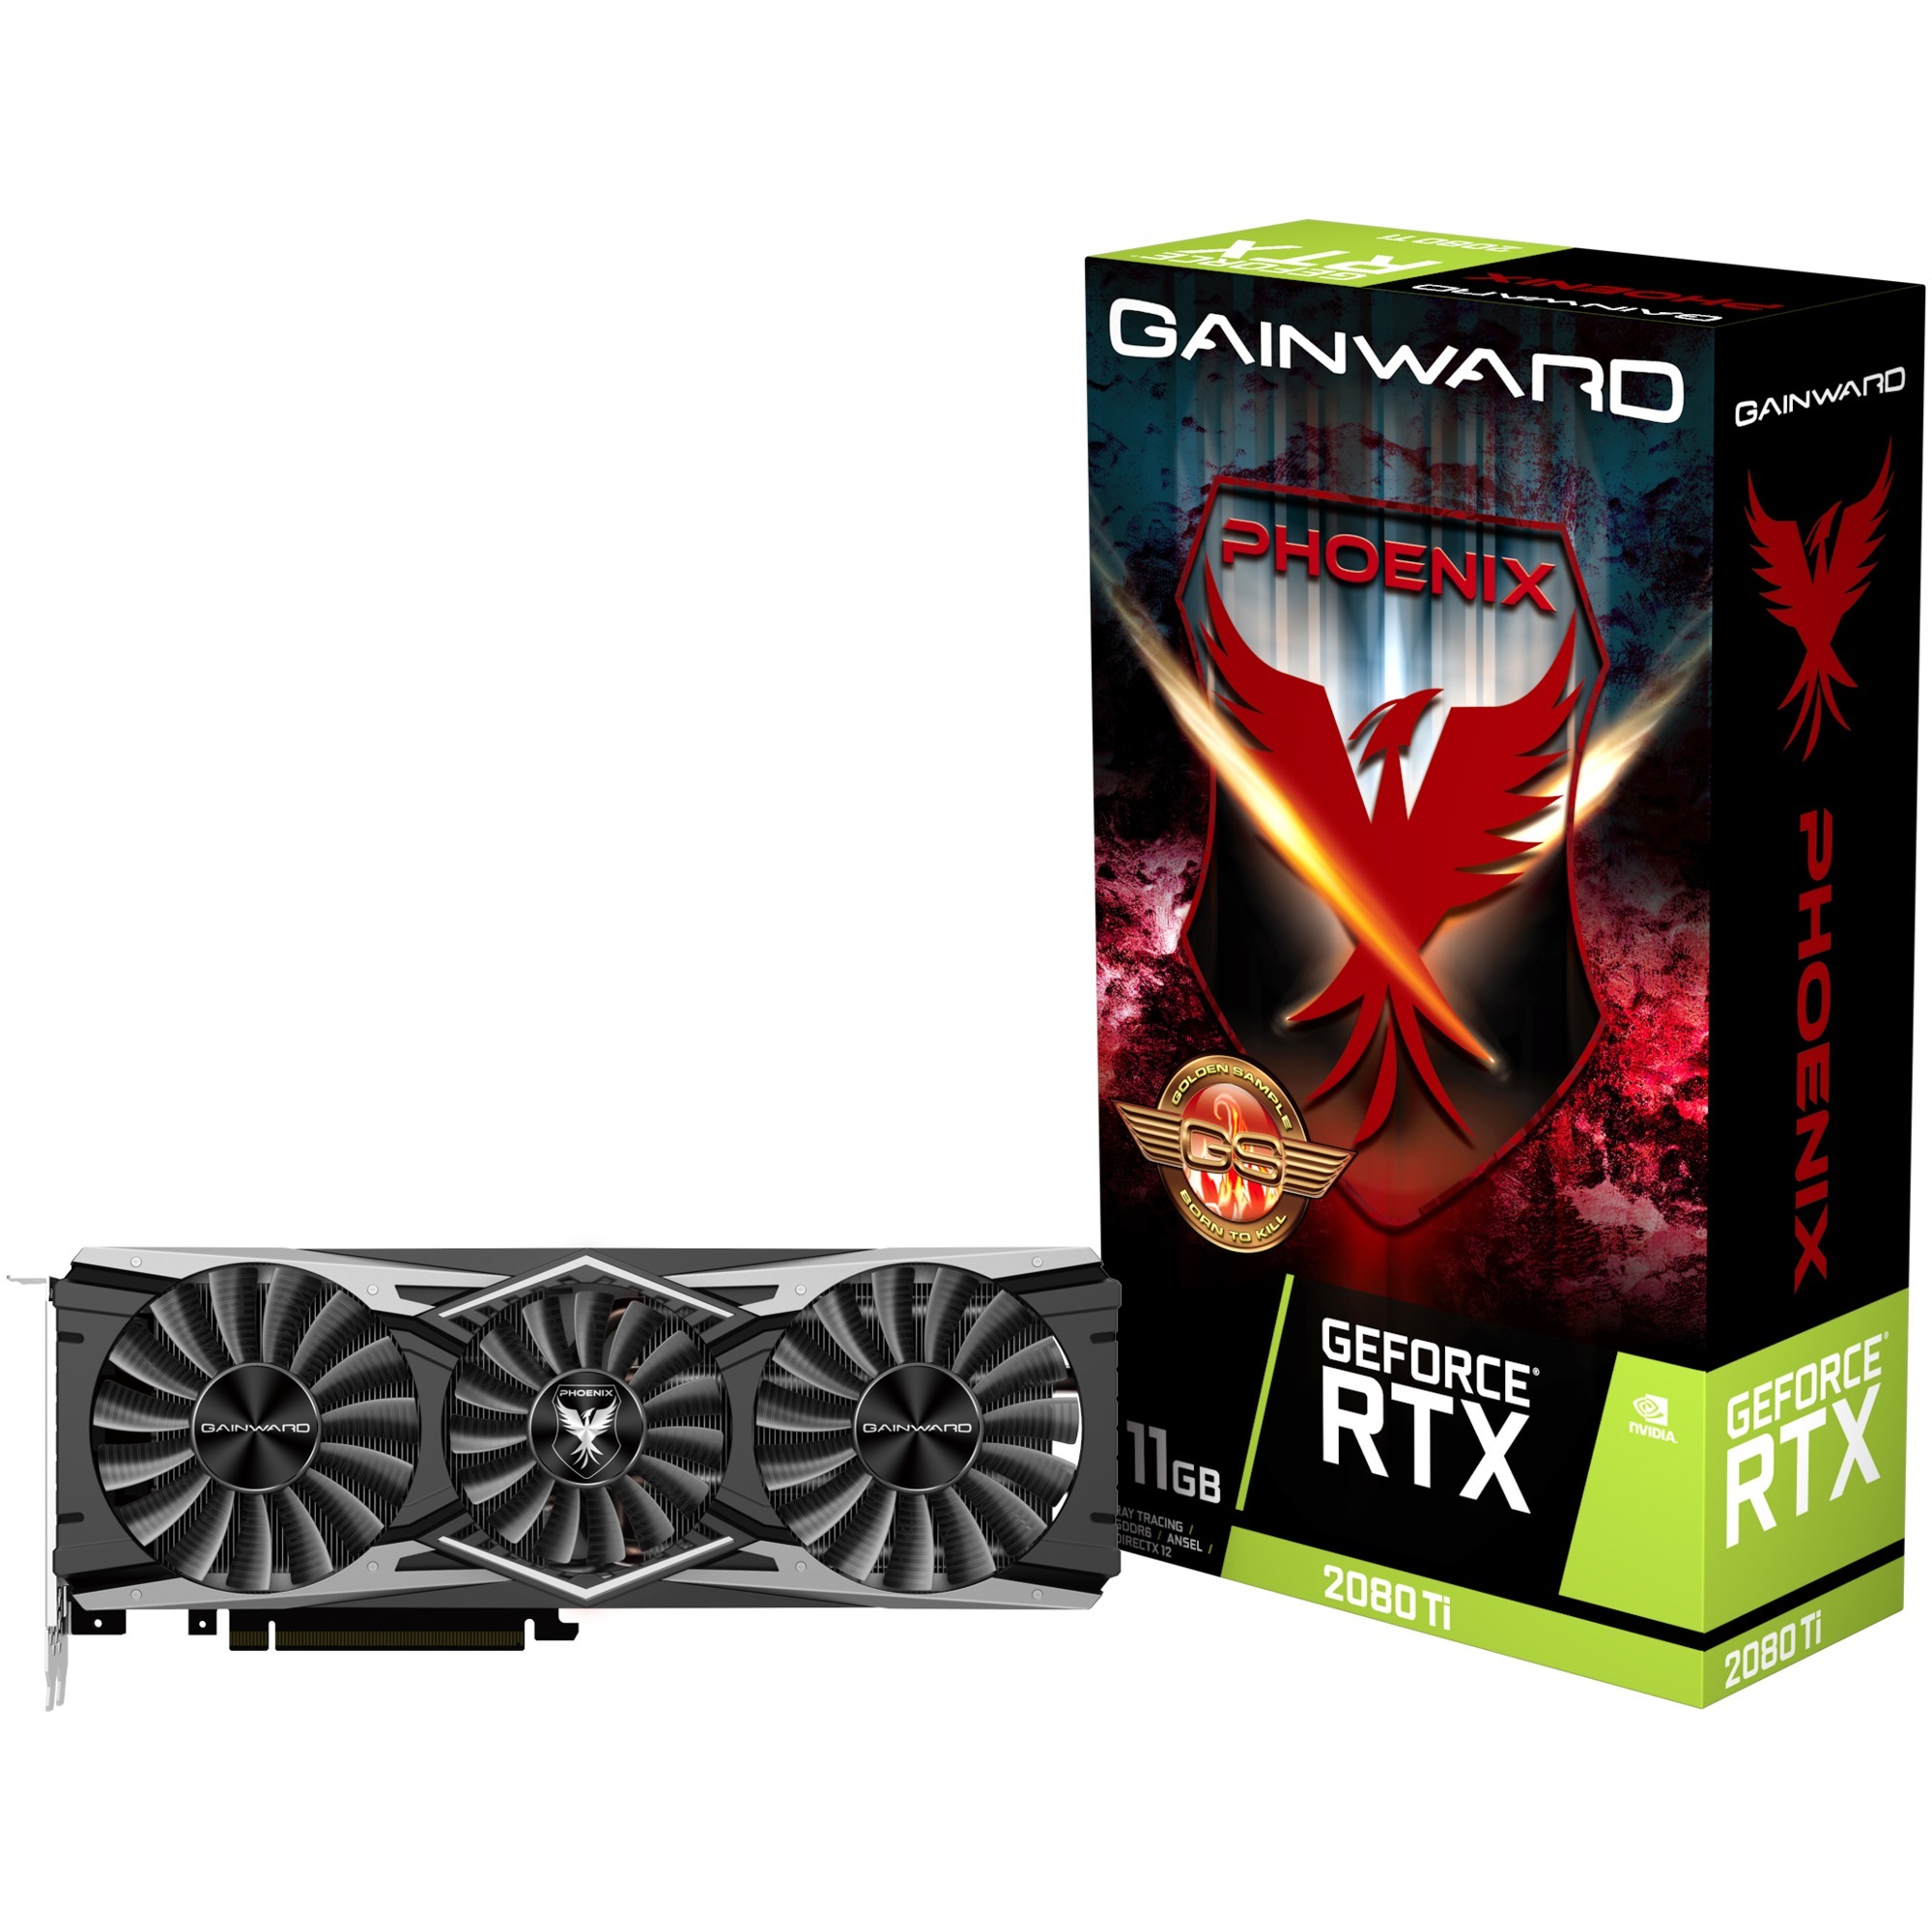 GeForce RTX 2080 Ti Phoenix "GS" 11 GB GDDR6, Karta graficzna